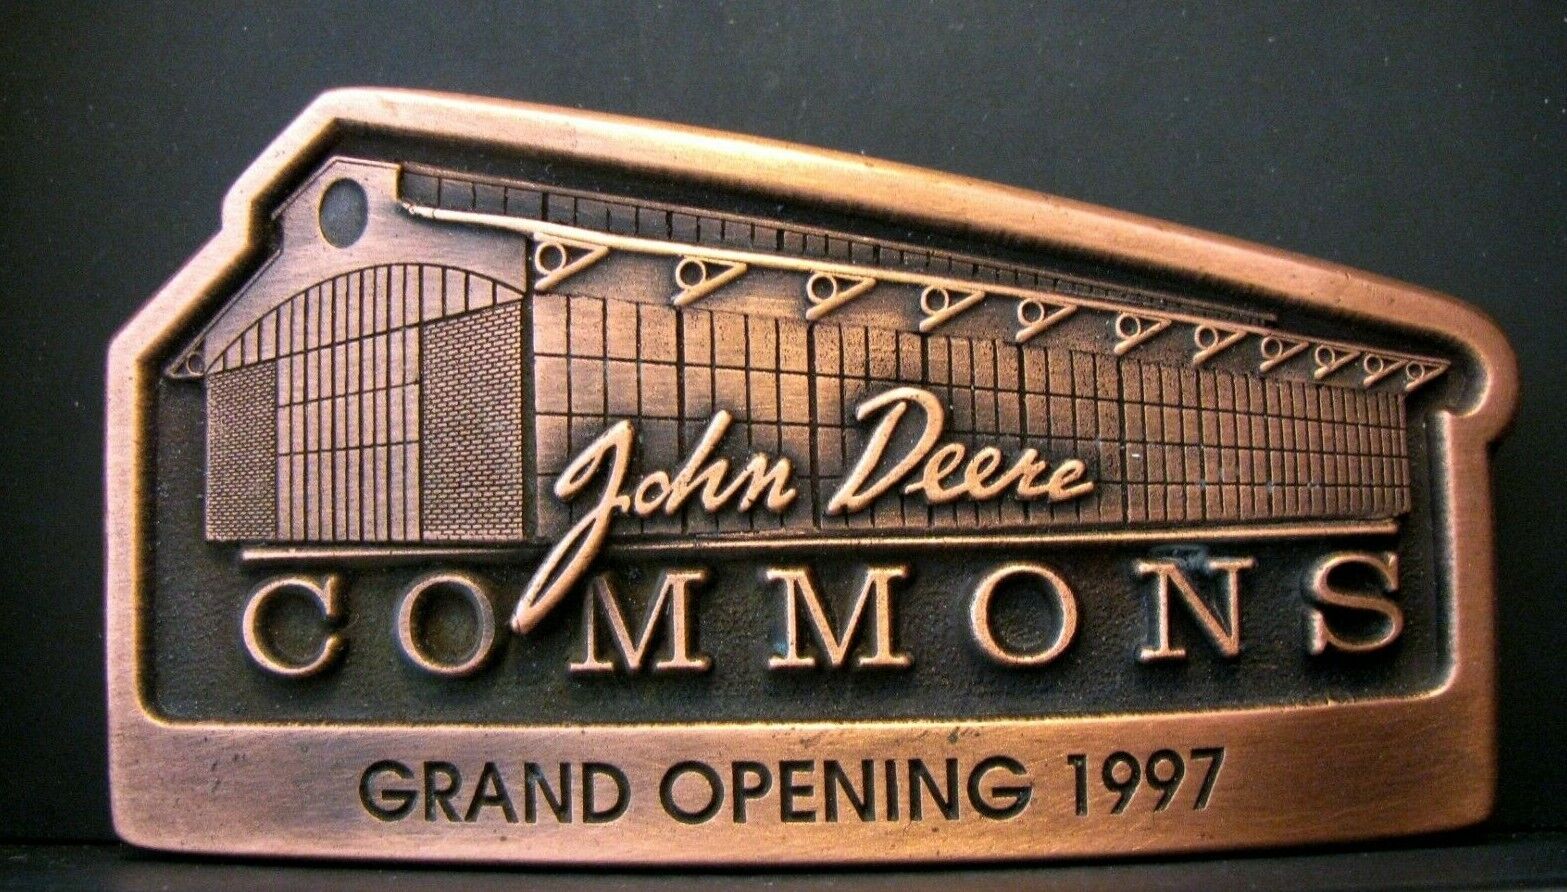 John Deere COMMONS Grand Opening 1997 Copper Colored Belt Buckle jd 1968 Logo